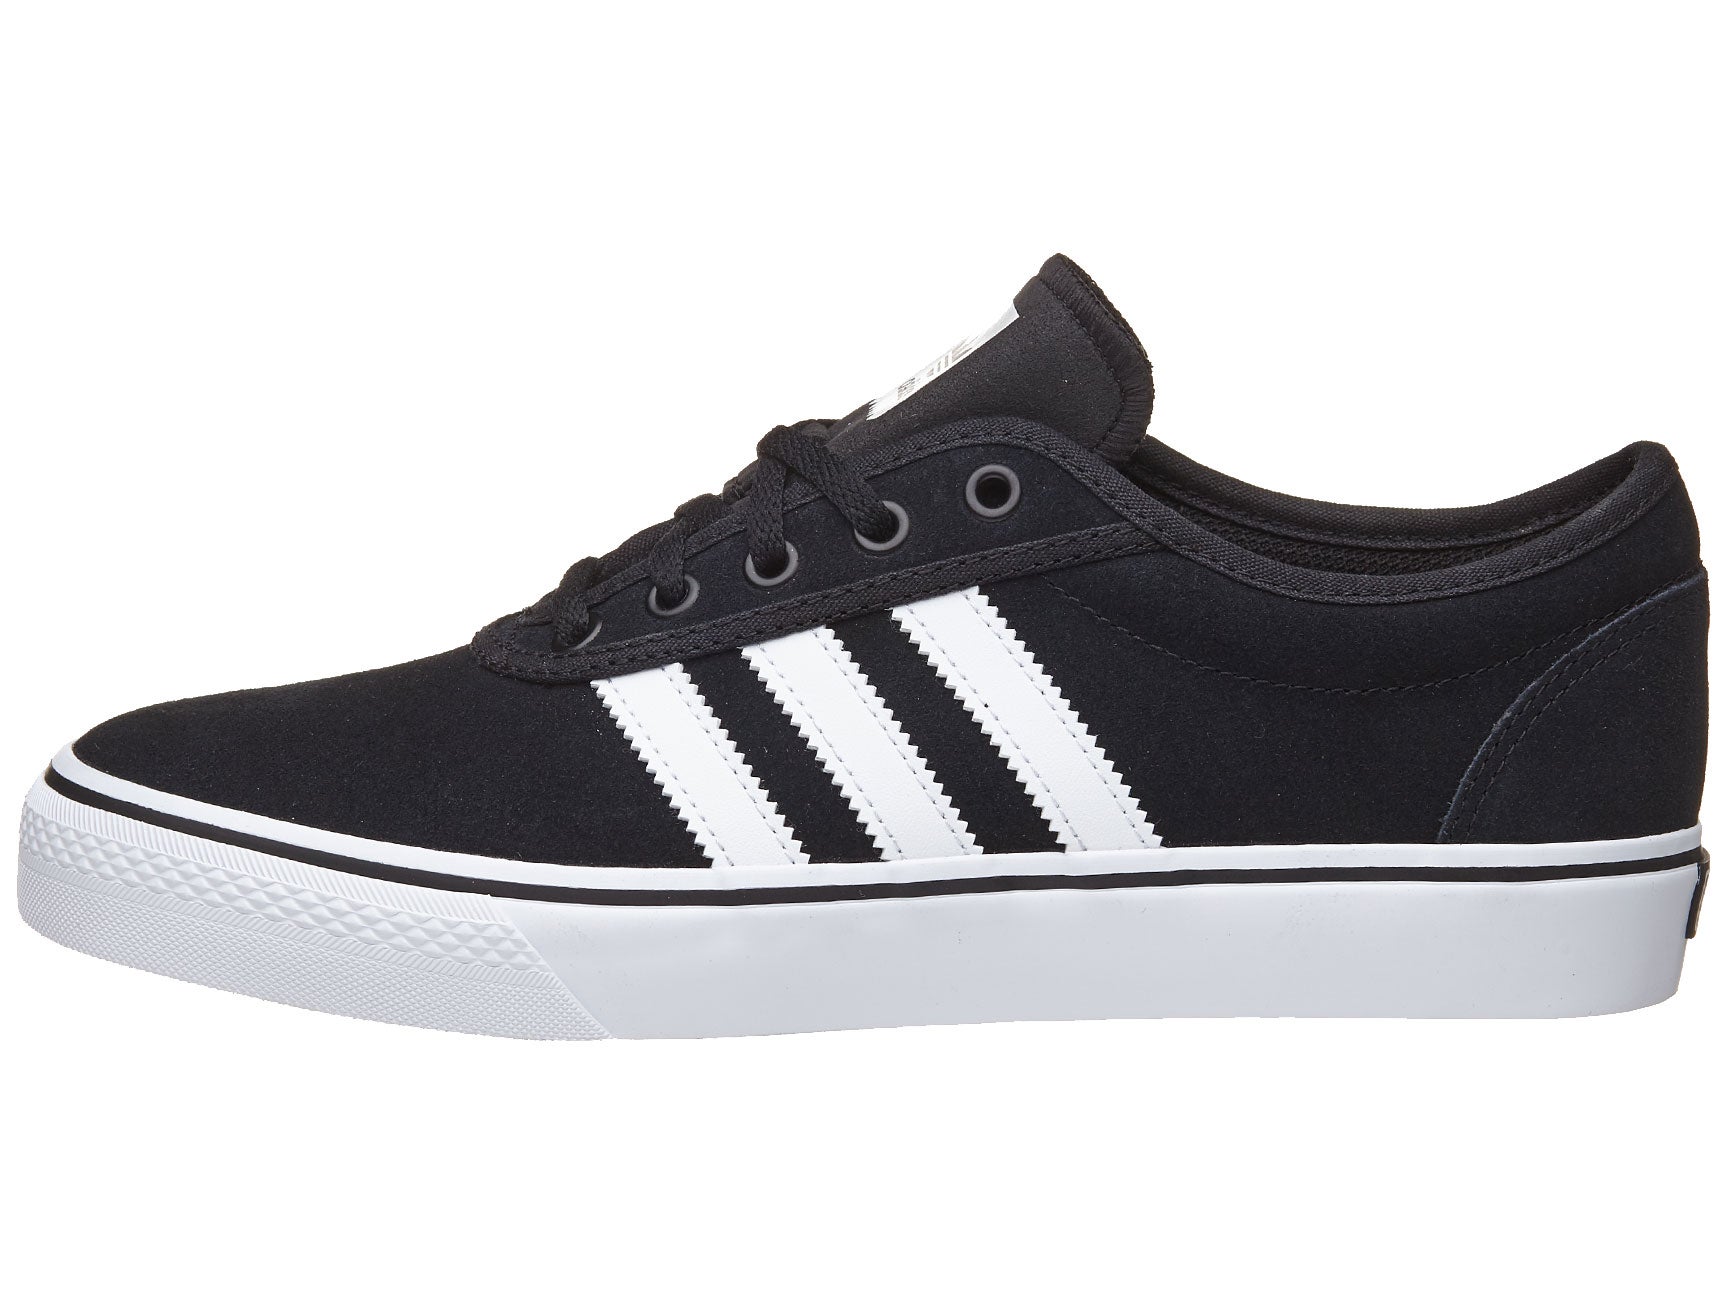 Adidas Adi-Ease Shoes Black/White/Black